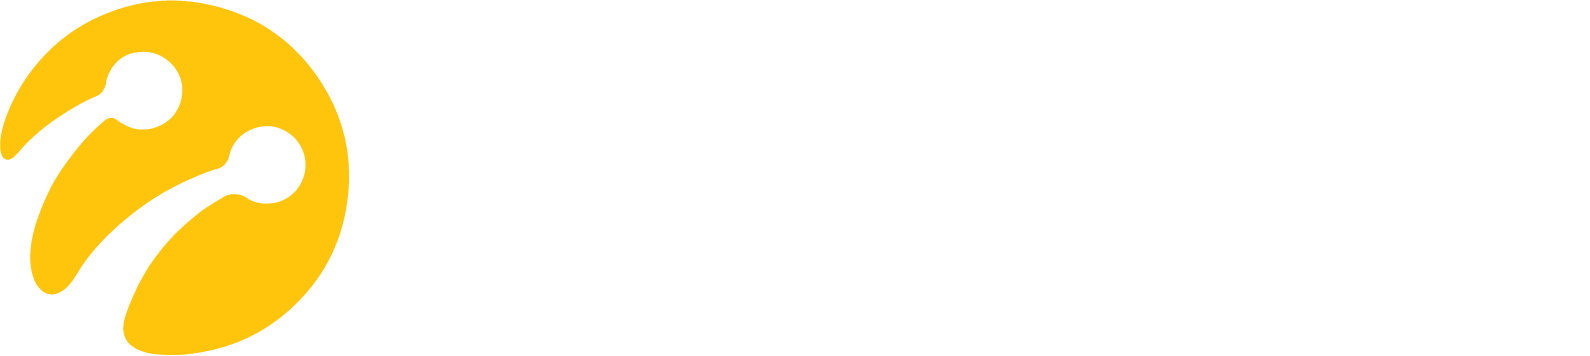 Turkcell logo large for dark backgrounds (transparent PNG)